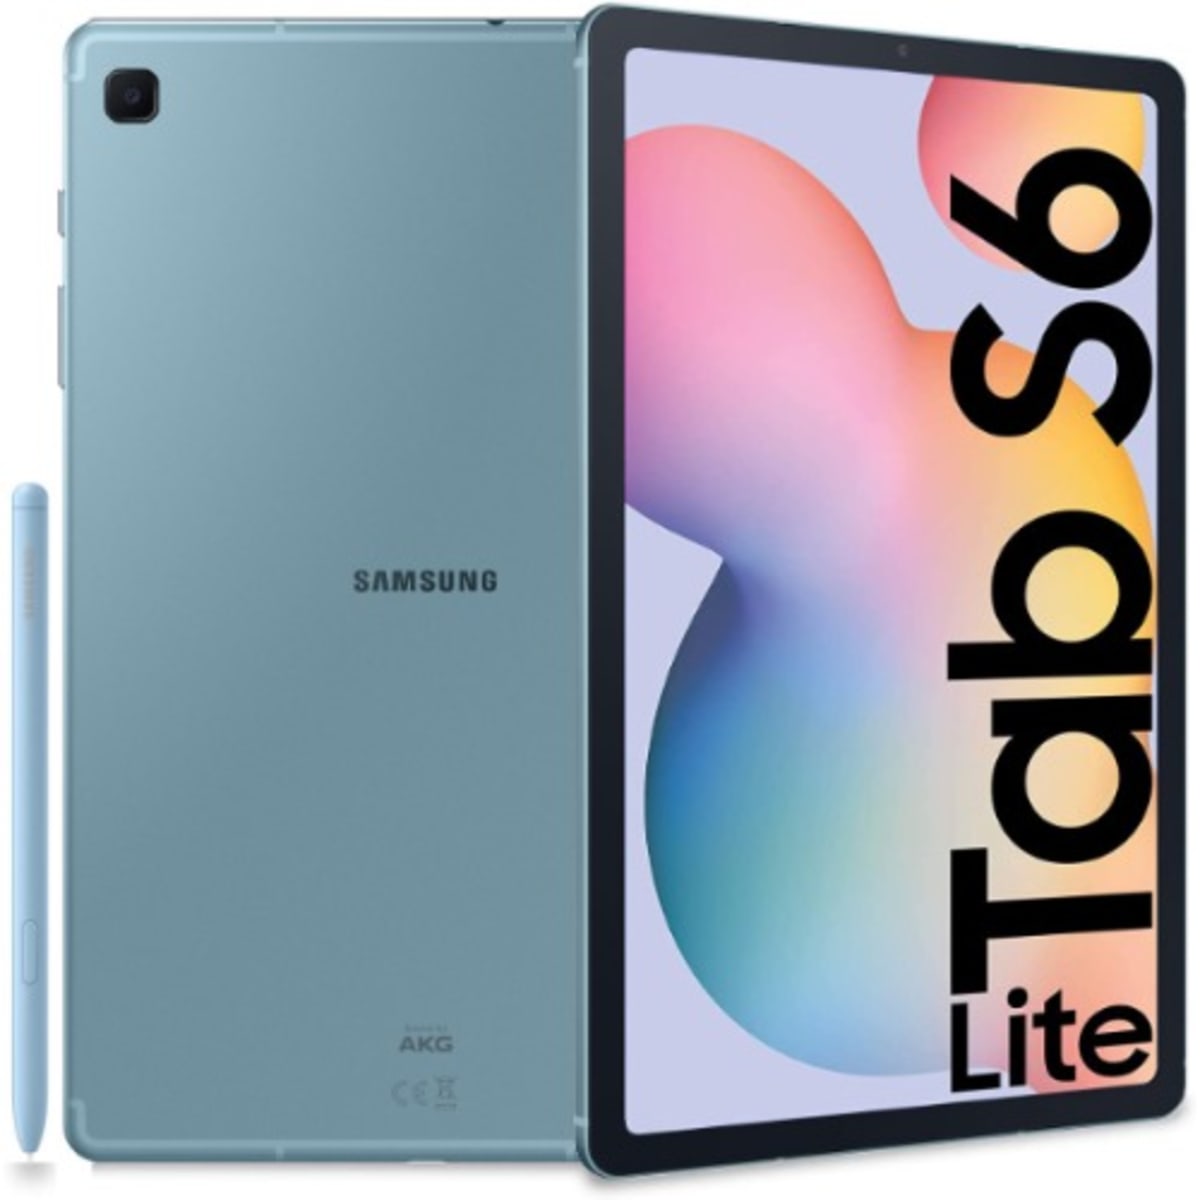 Samsung Galaxy Tab S6 Lite 10.4 Tablet, 64GB